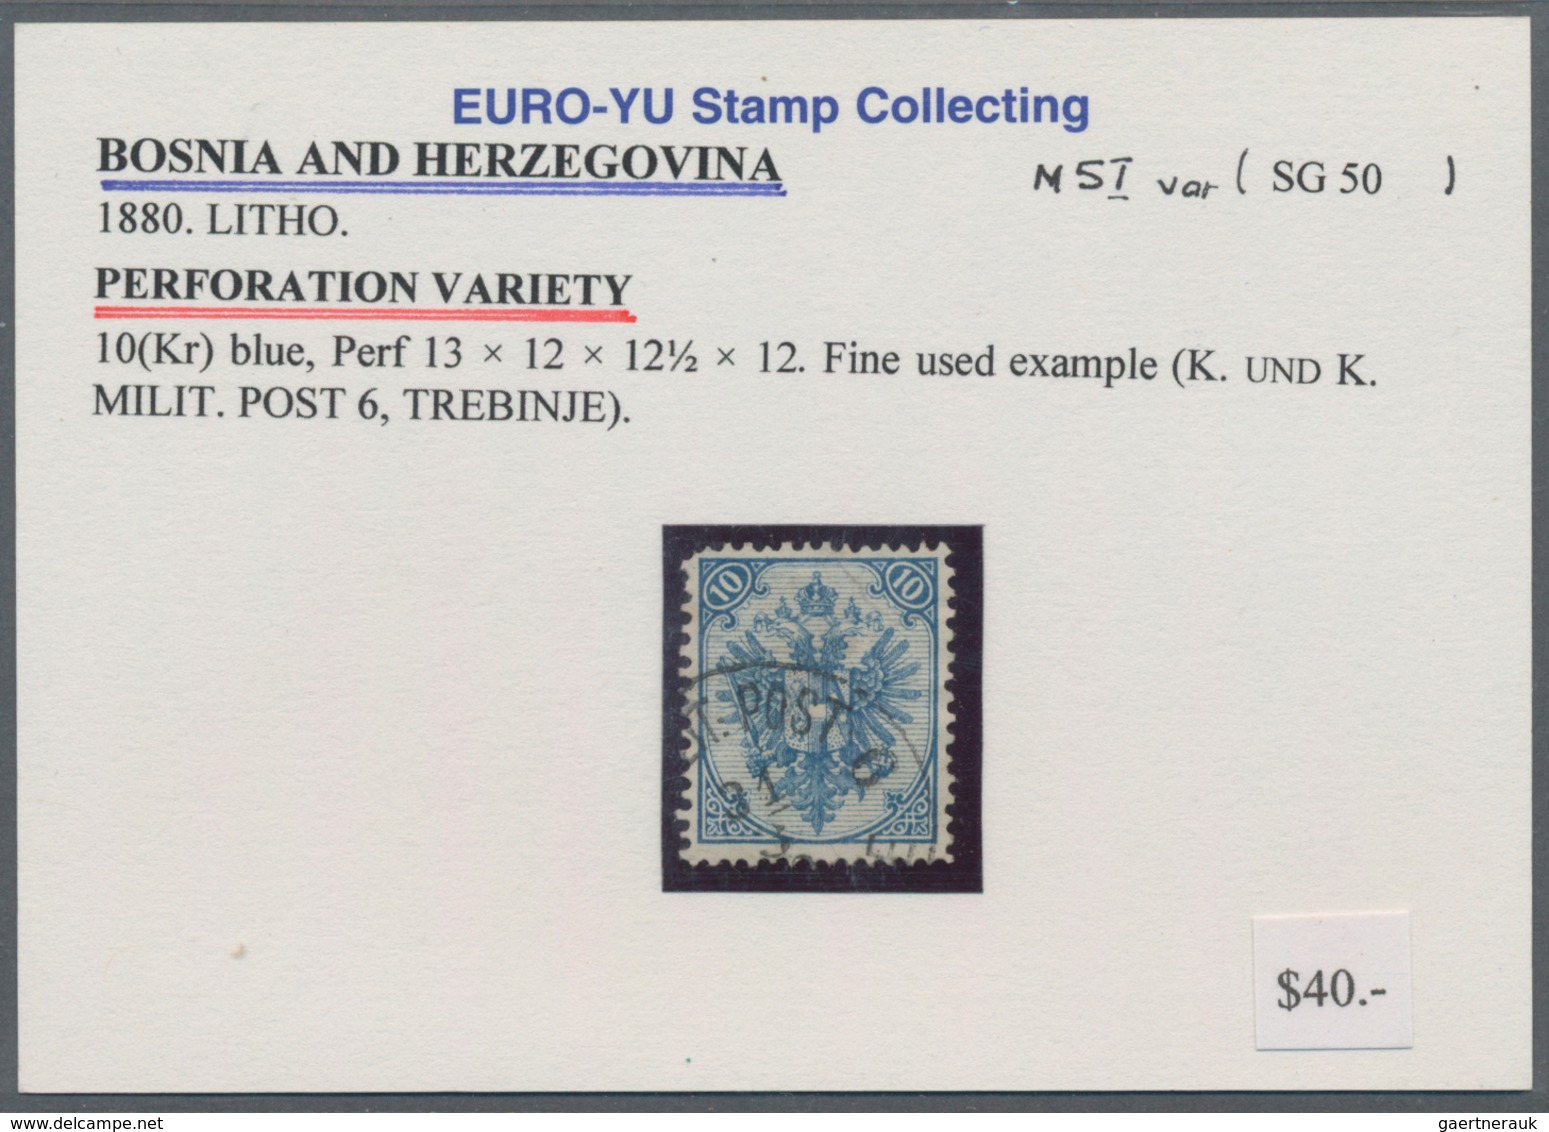 Bosnien und Herzegowina: 1879/1899, Definitives "Double Eagle", 10kr. blue, specialised assortment o